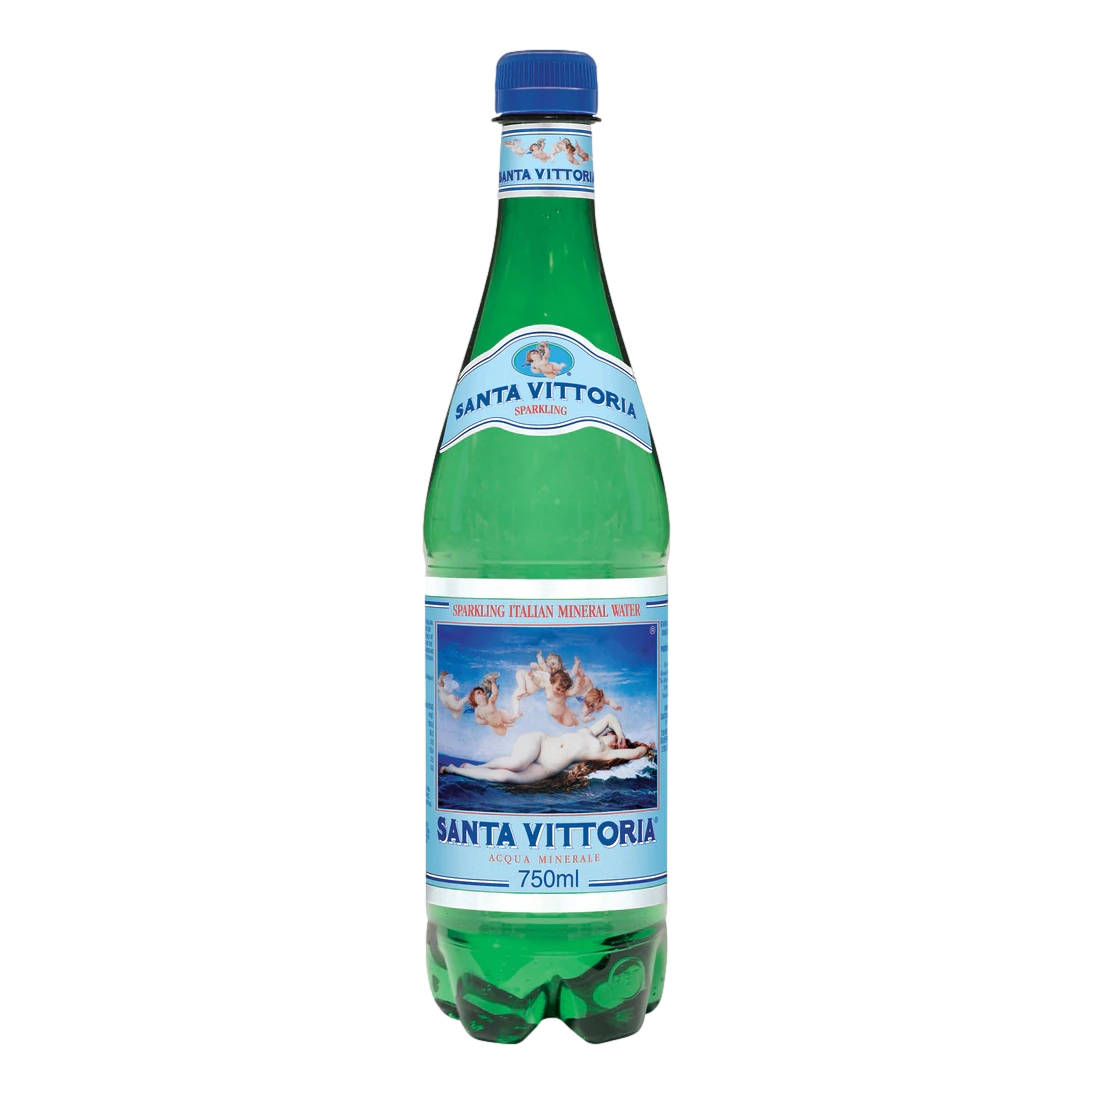 Santa Vittoria Sparkling Mineral Water 750ml Bottle 6 Pack